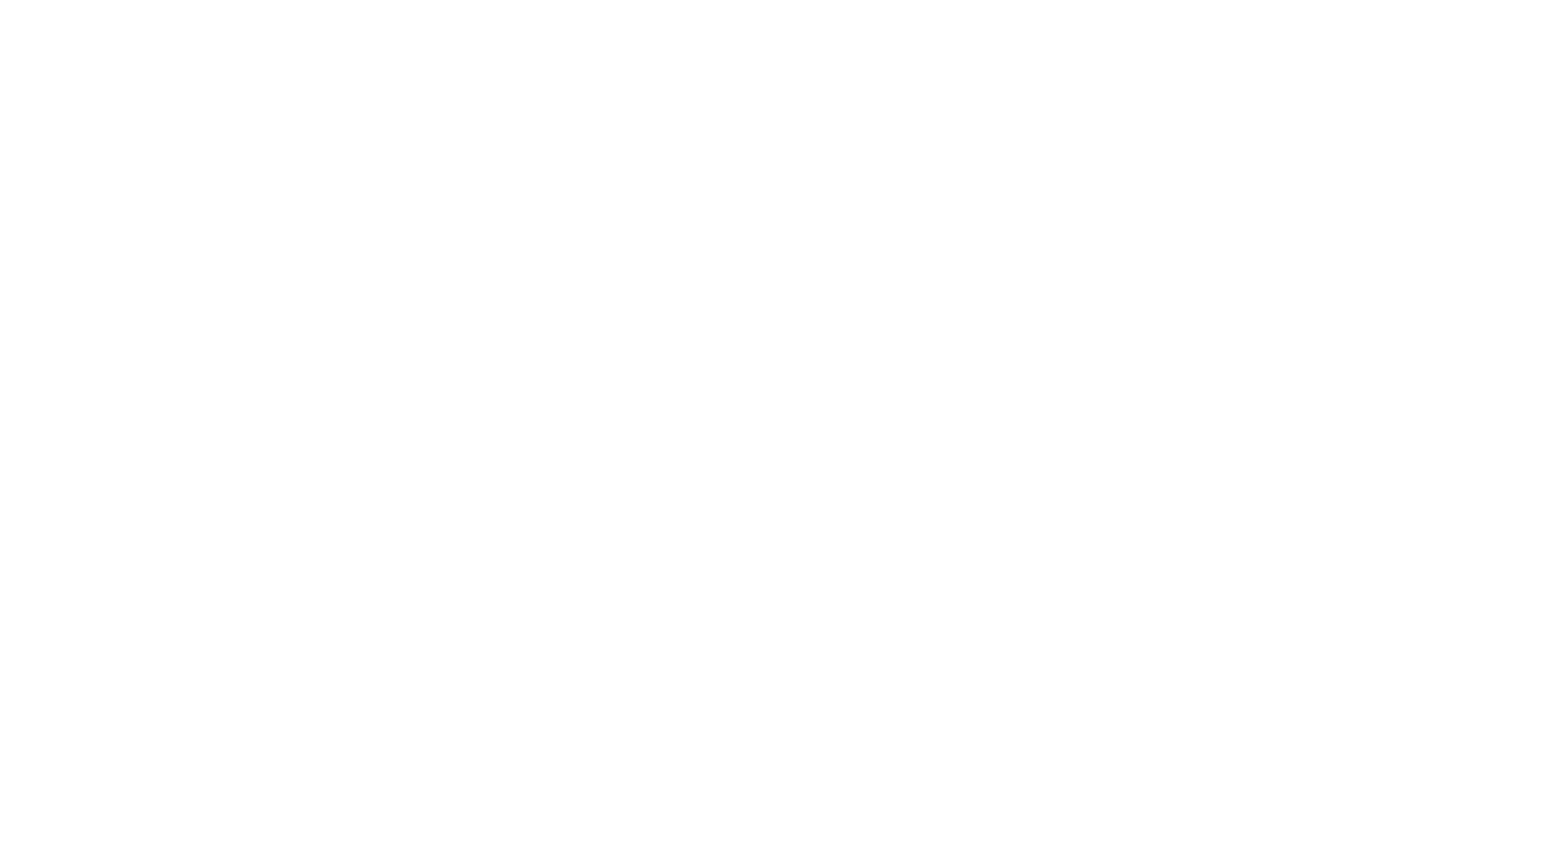 Banorte logo pour fonds sombres (PNG transparent)